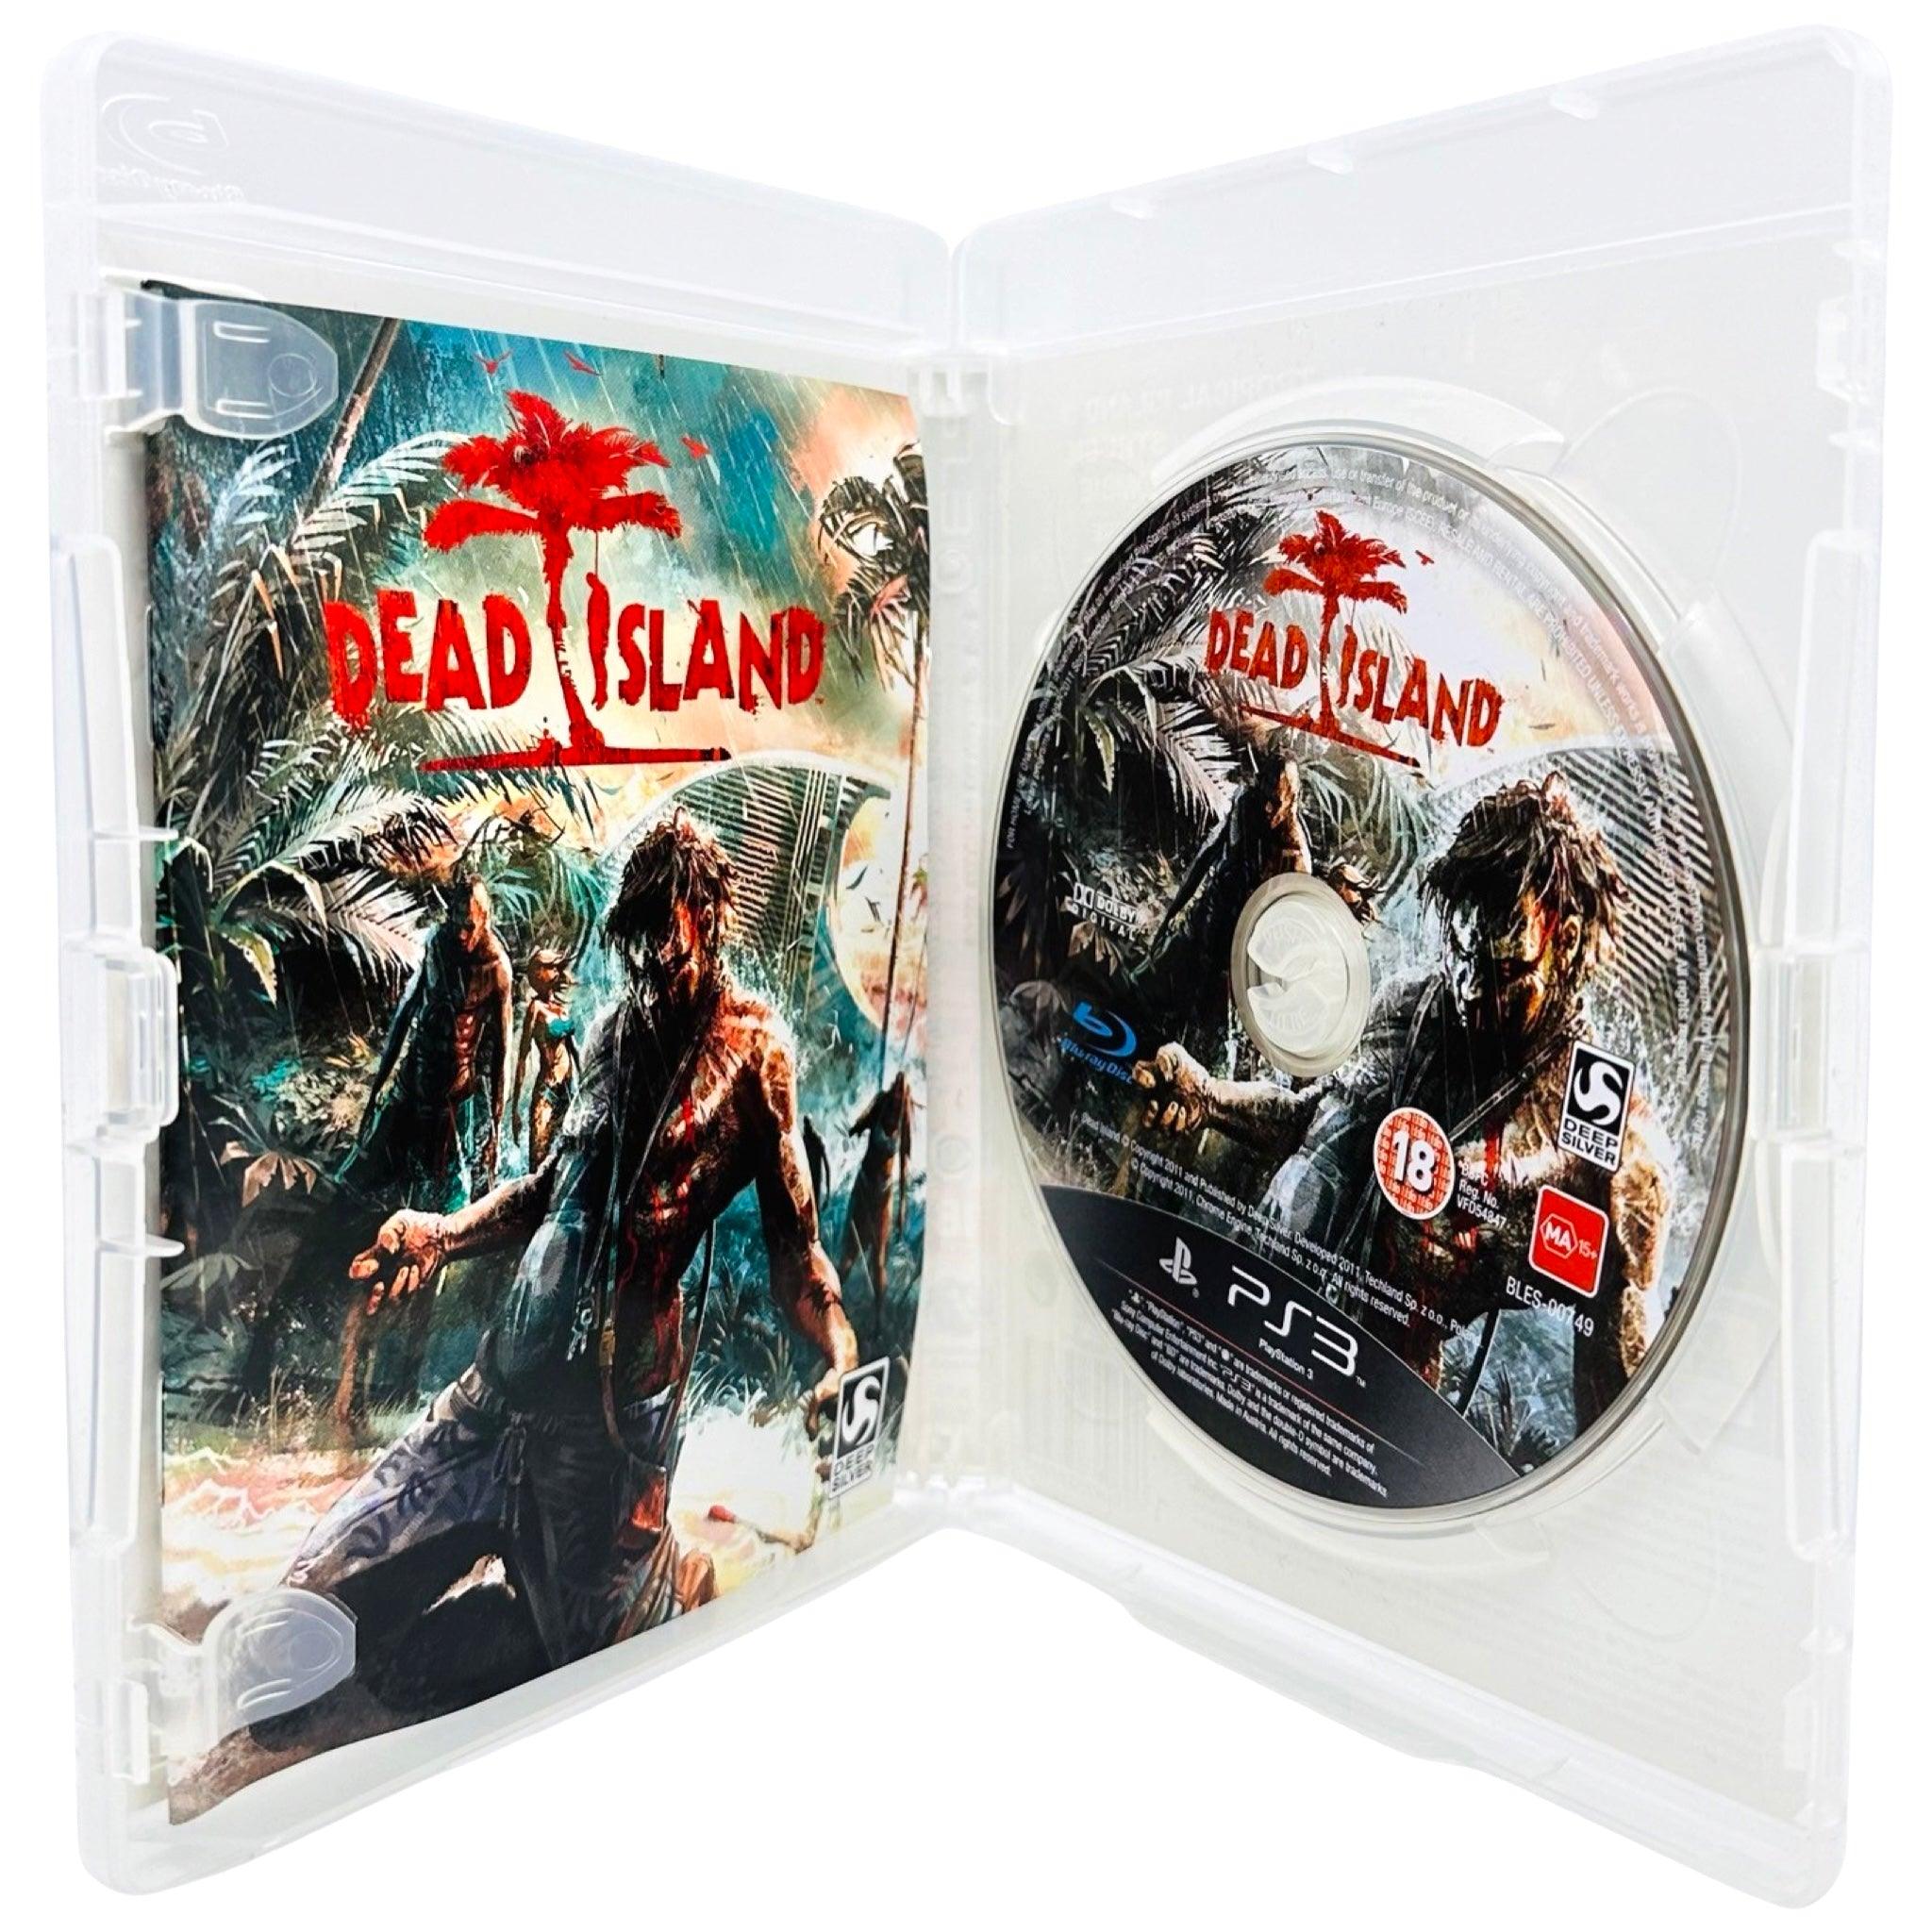 PS3: Dead Island - RetroGaming.no